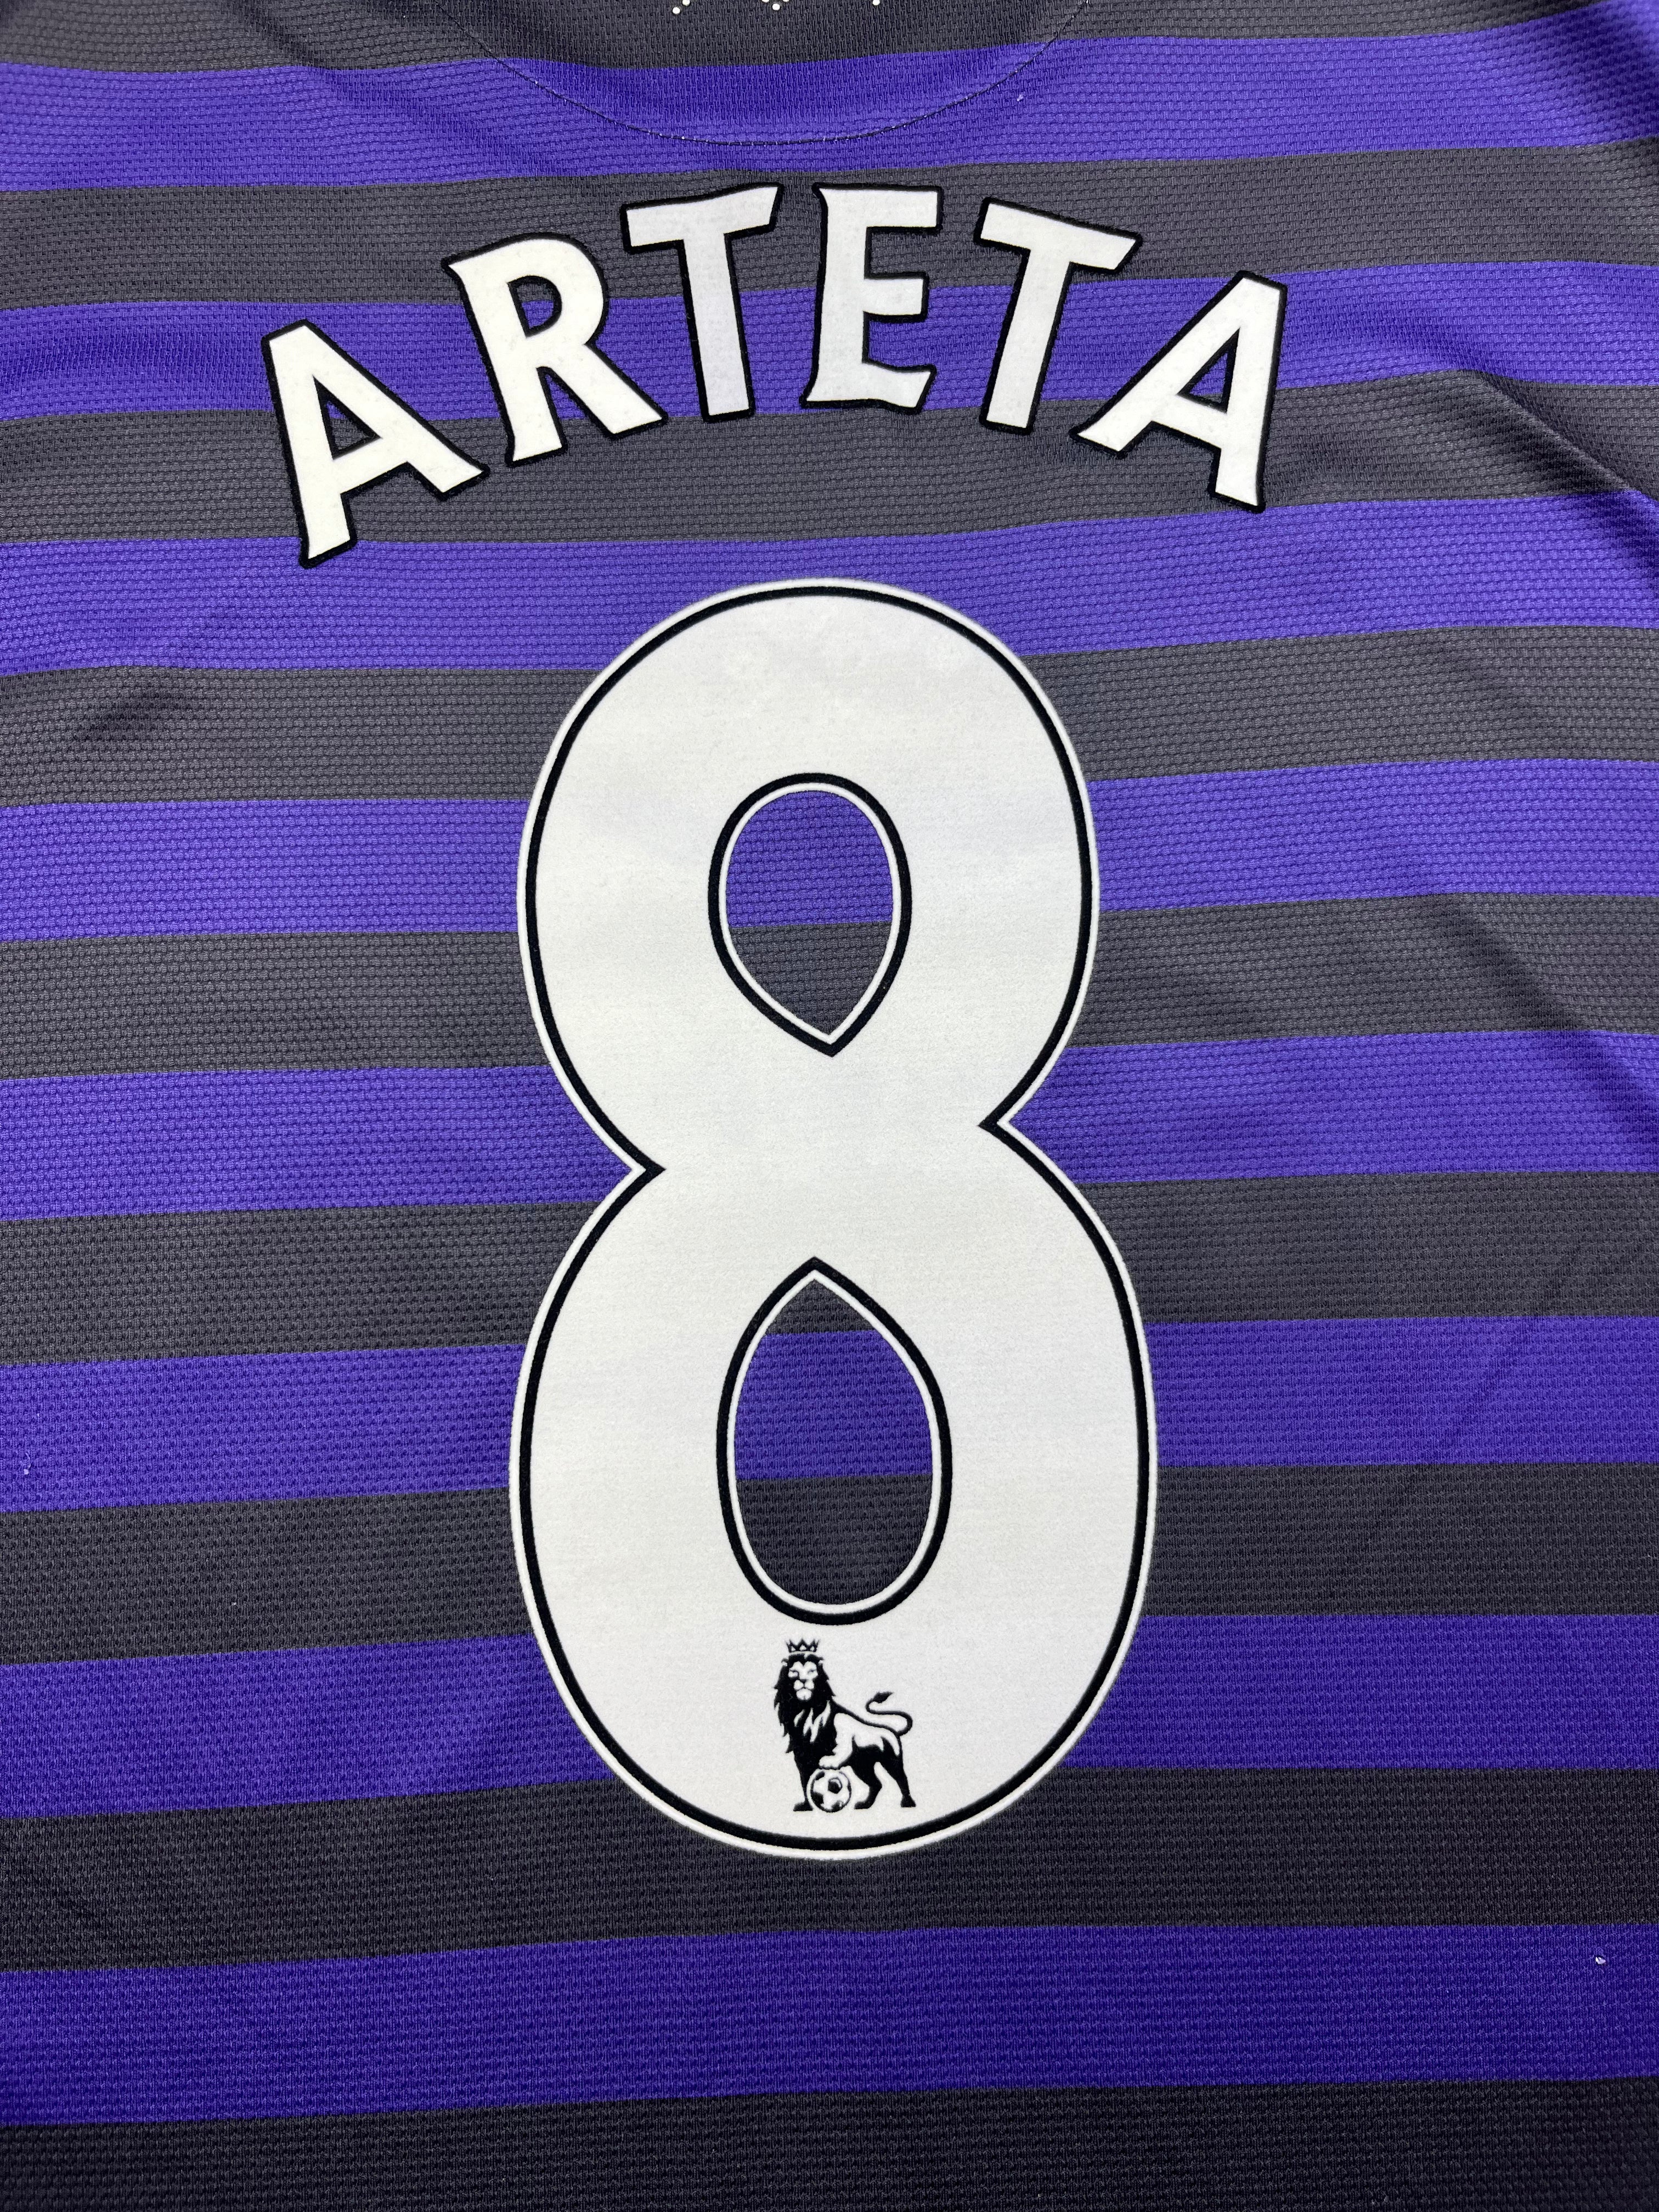 2012/13 Arsenal Away Shirt Arteta #8 (XXL) 7/10